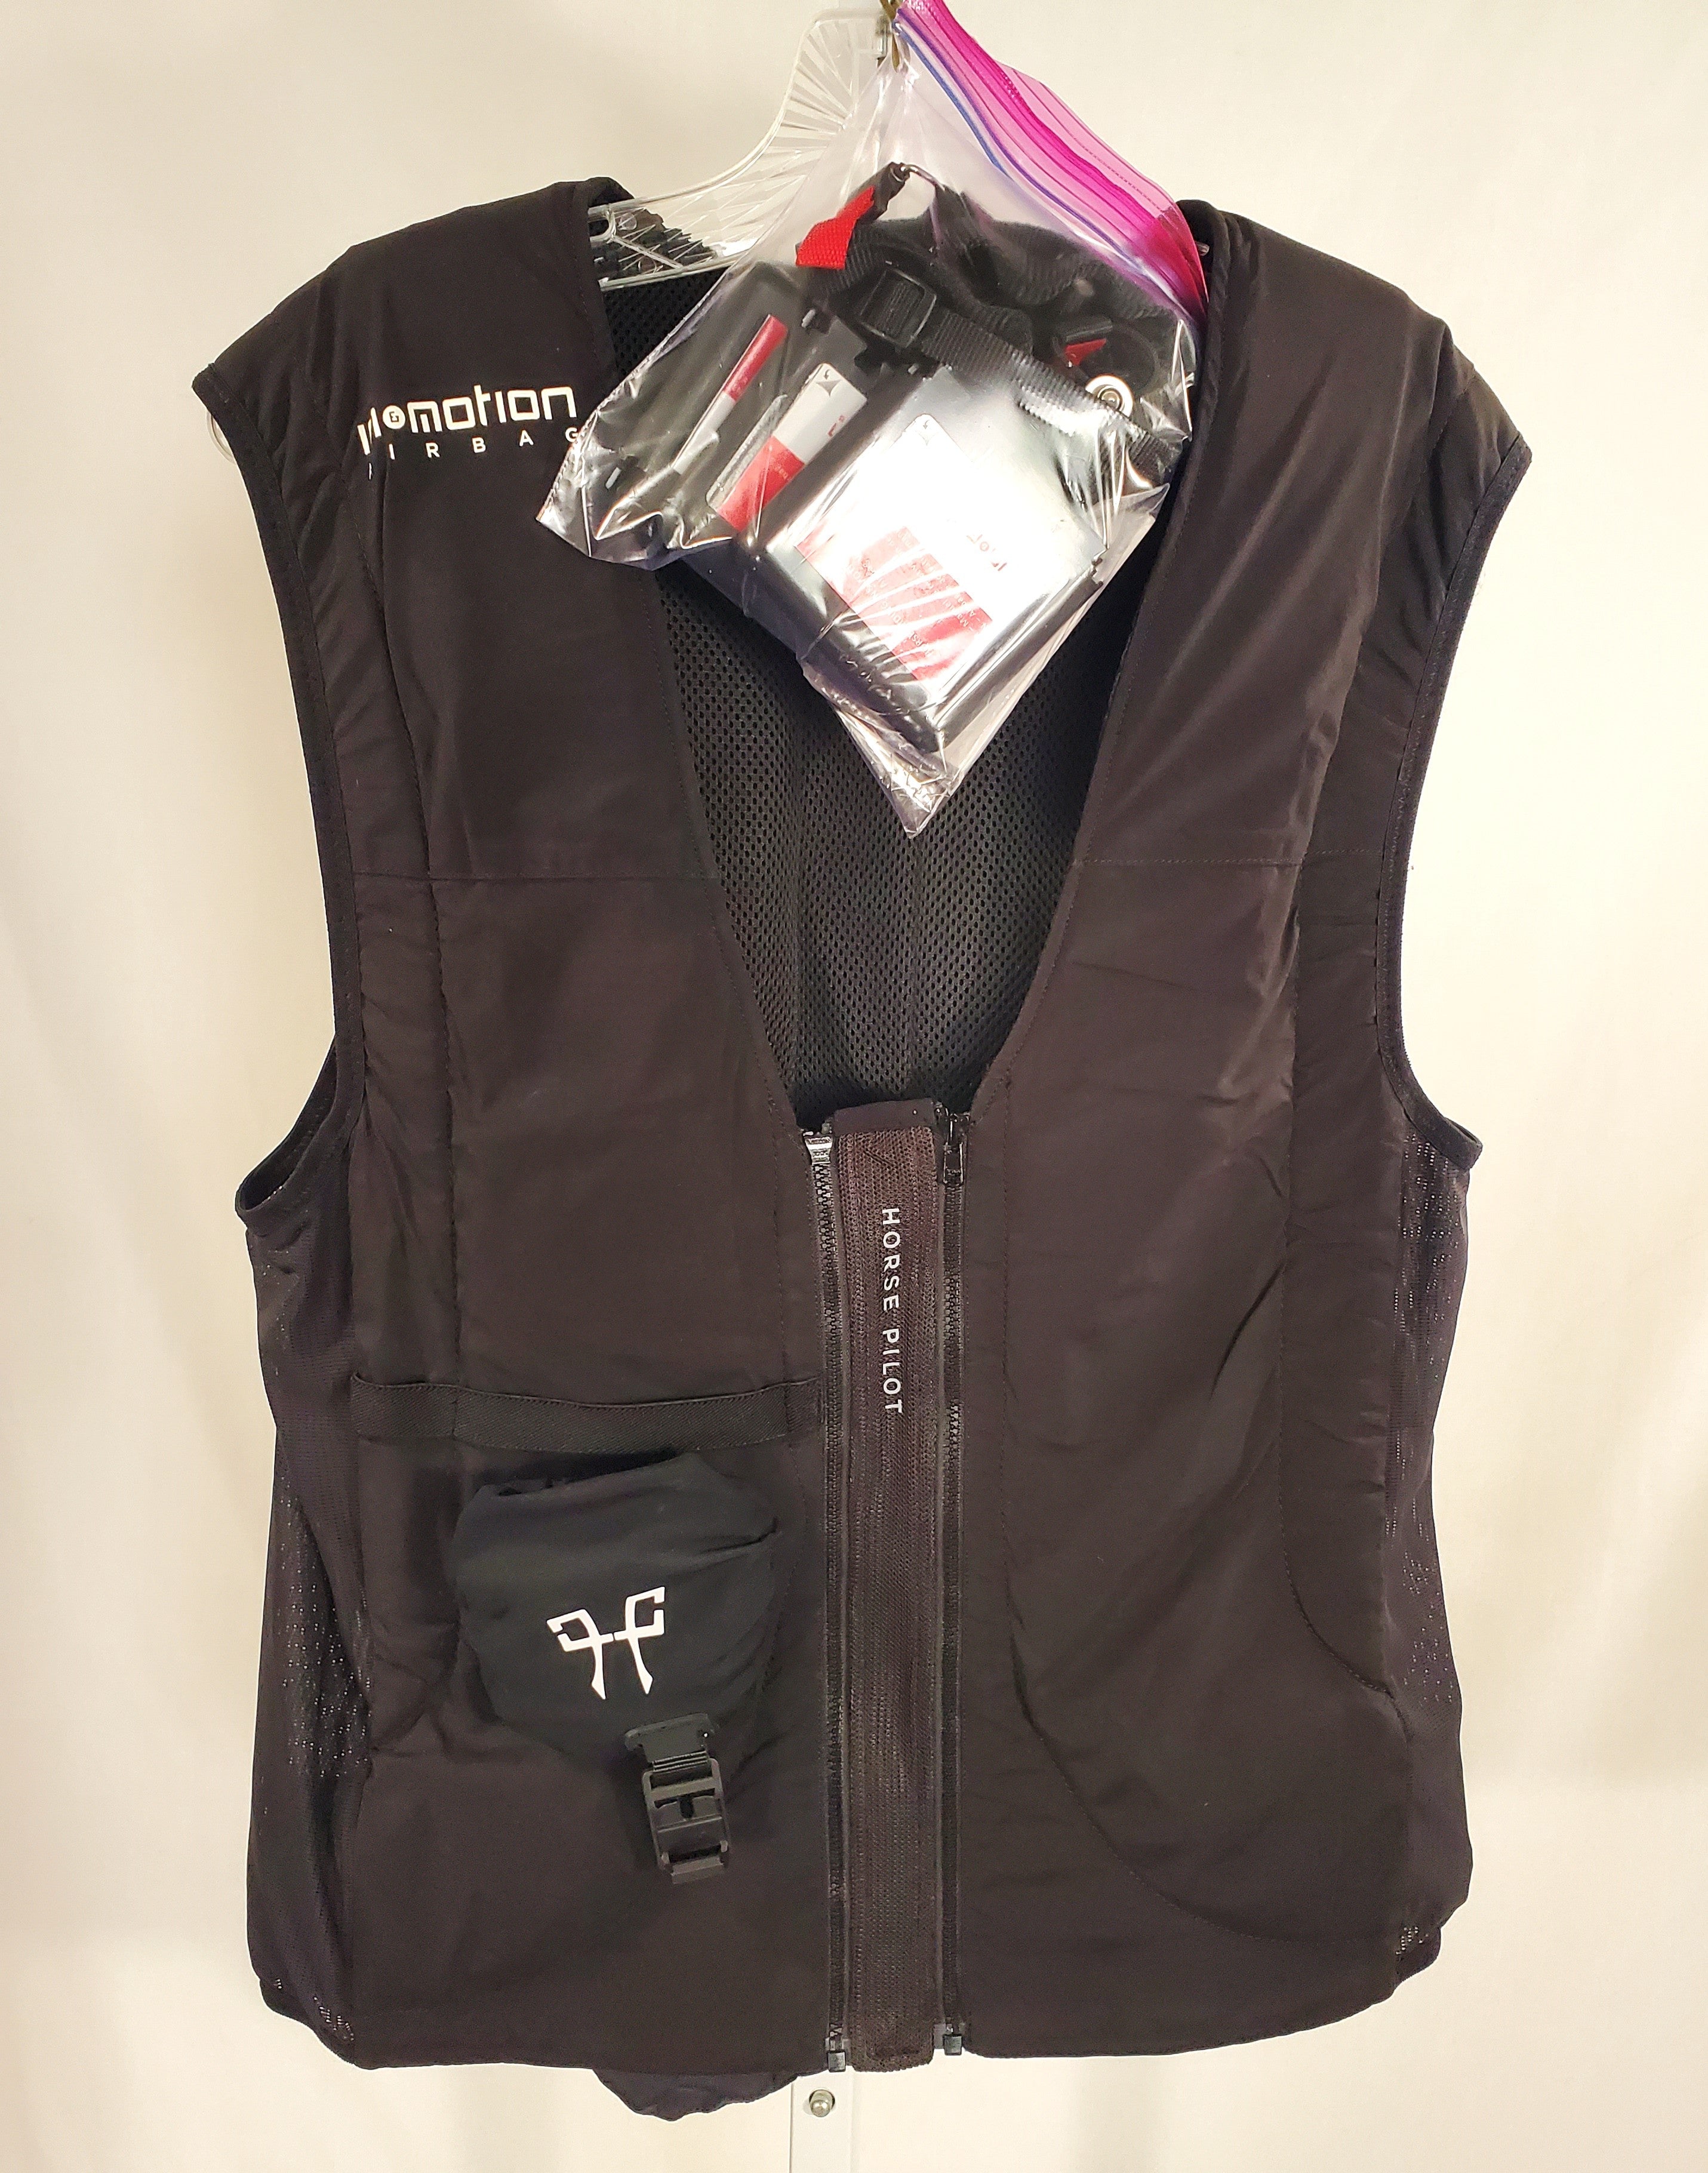 Horse Pilot Unisex Airbag Vest with 3 CO2 Cartridges - XL - New!